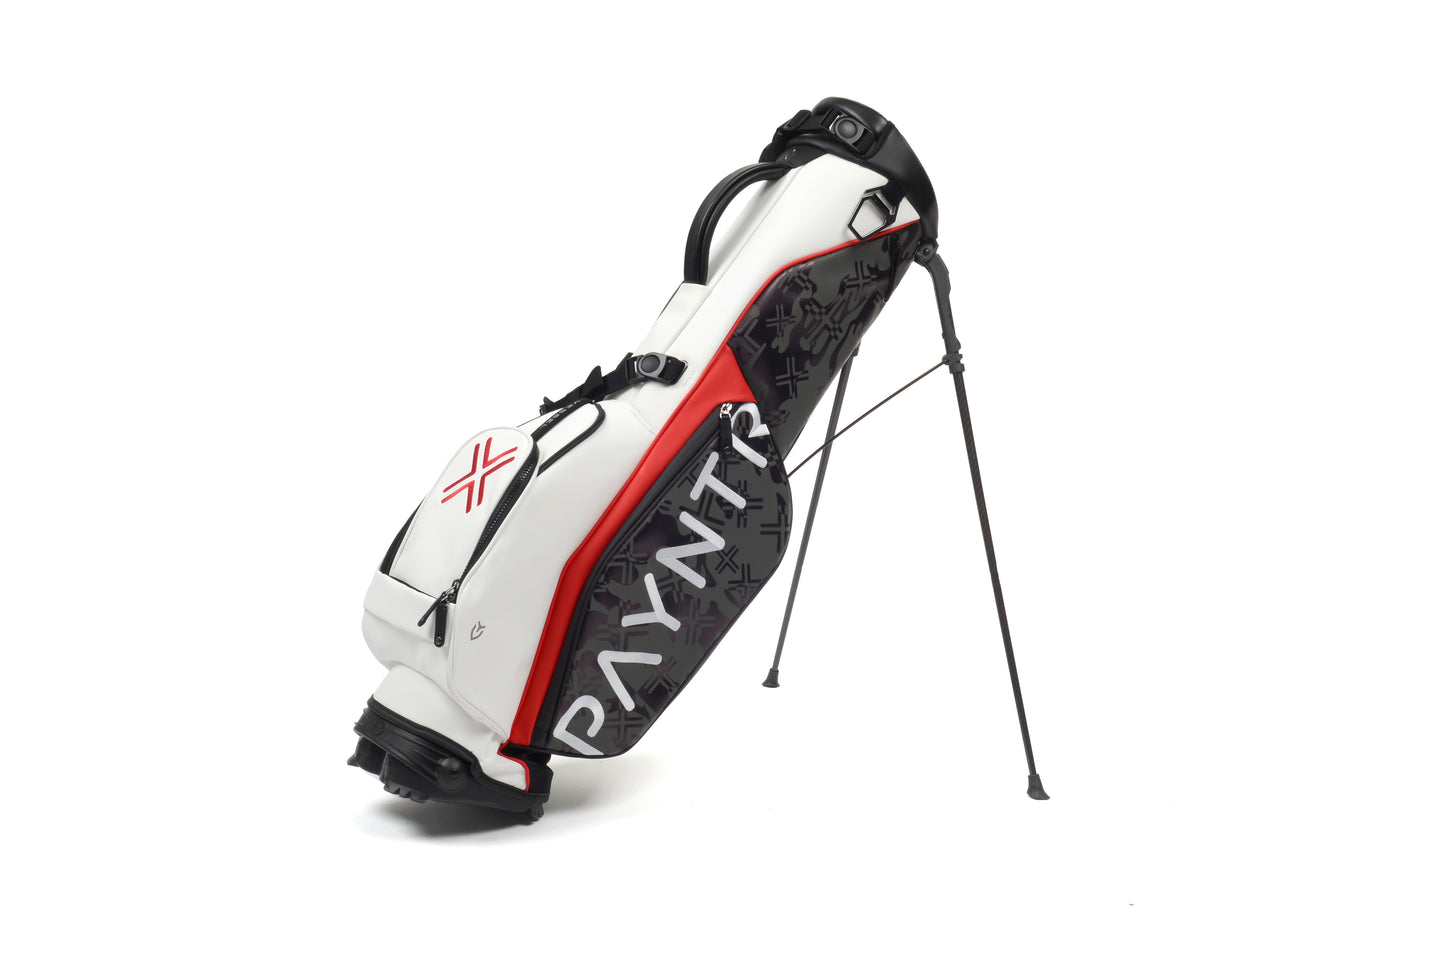 PAYNTR Golf x VESSEL VLX Stand Bag